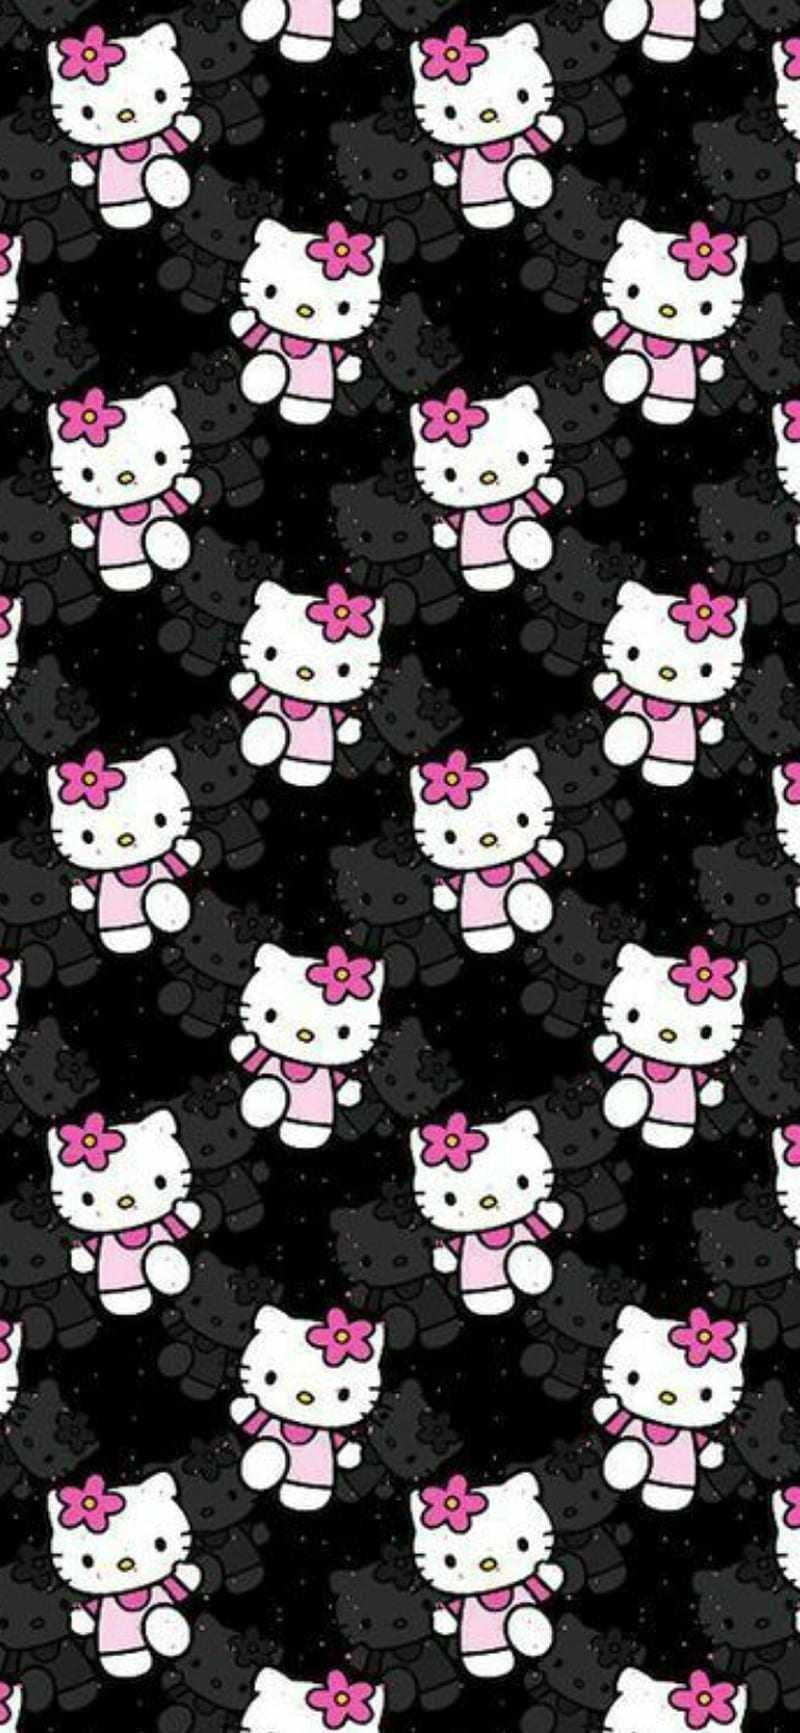 Aesthetic hello kitty Wallpaper Download